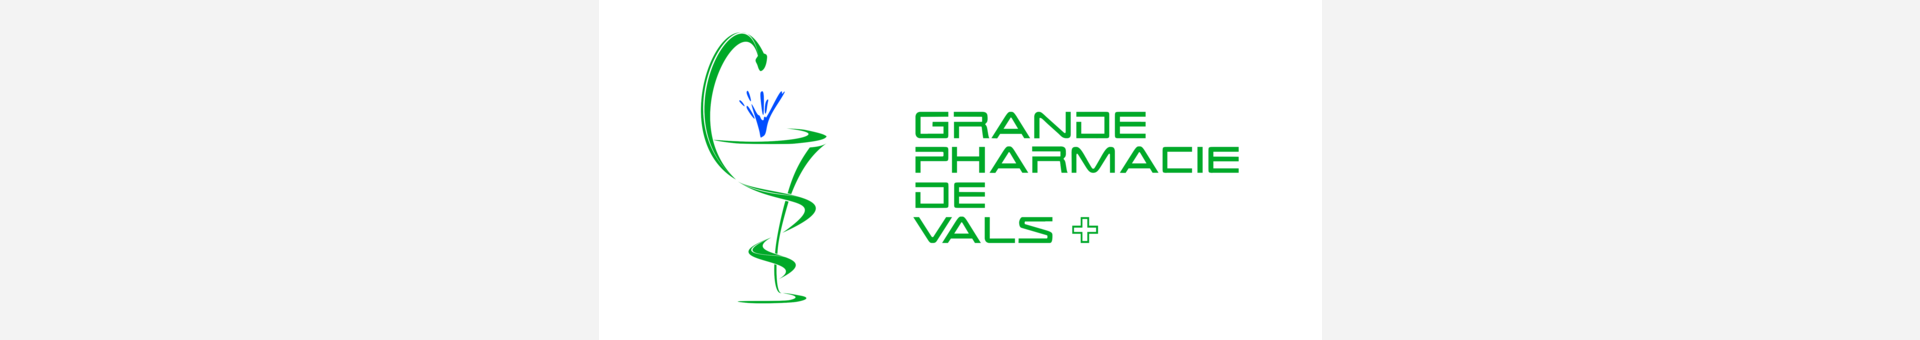 Grande Pharmacie de Vals - Vals-les-Bains - 07600